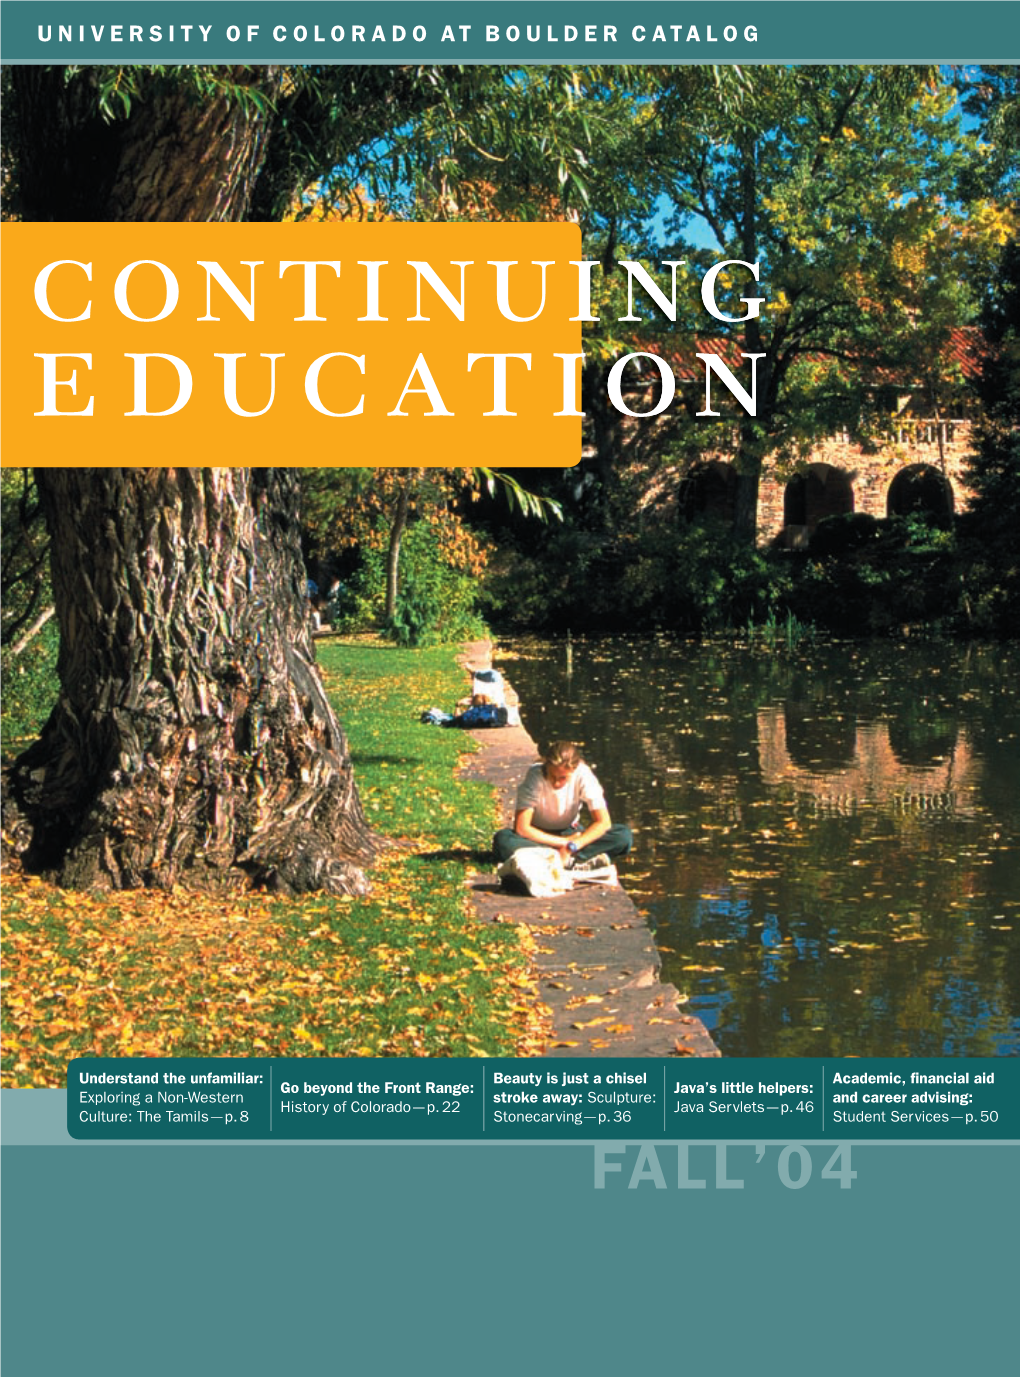 Fall 2004 Continuing Education Catalog